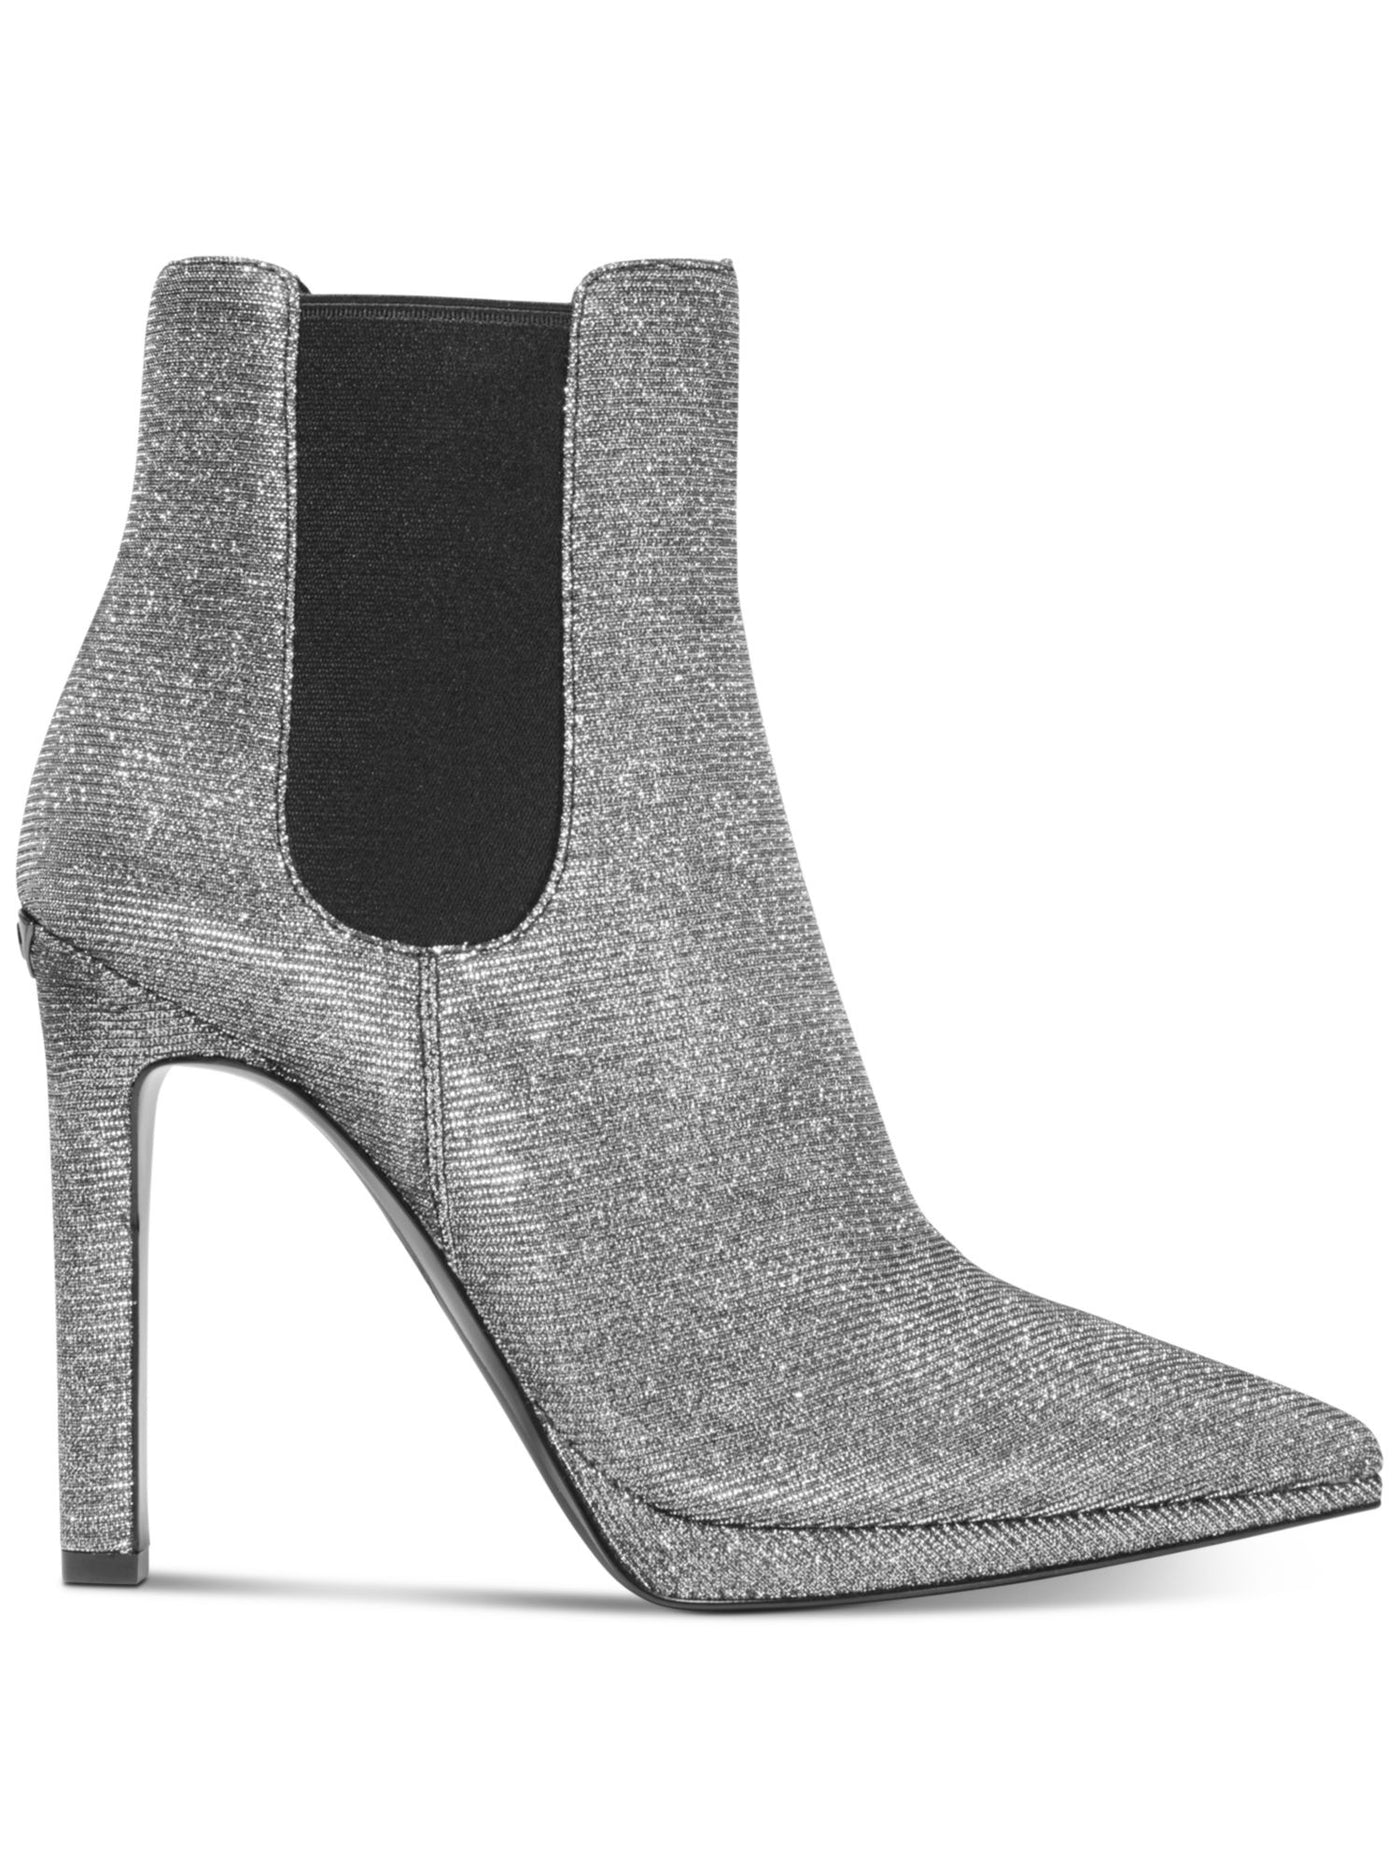 MICHAEL KORS Womens Silver Side Goring Glitter Metallic Brielle Pointed Toe Stiletto Booties 9 M